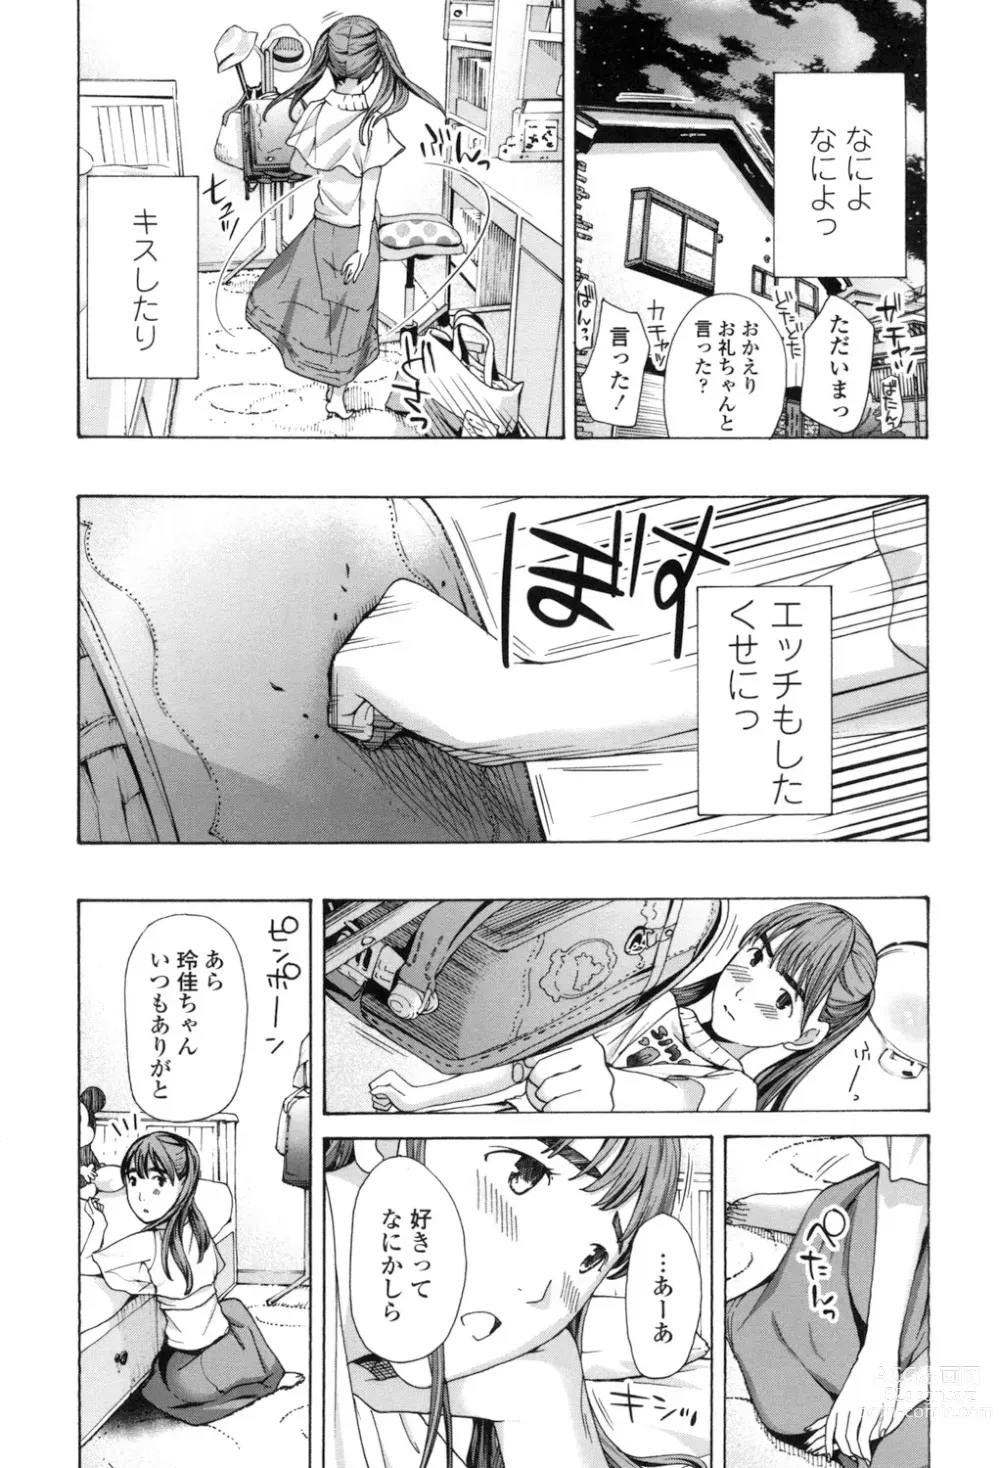 Page 178 of manga Girls Girls